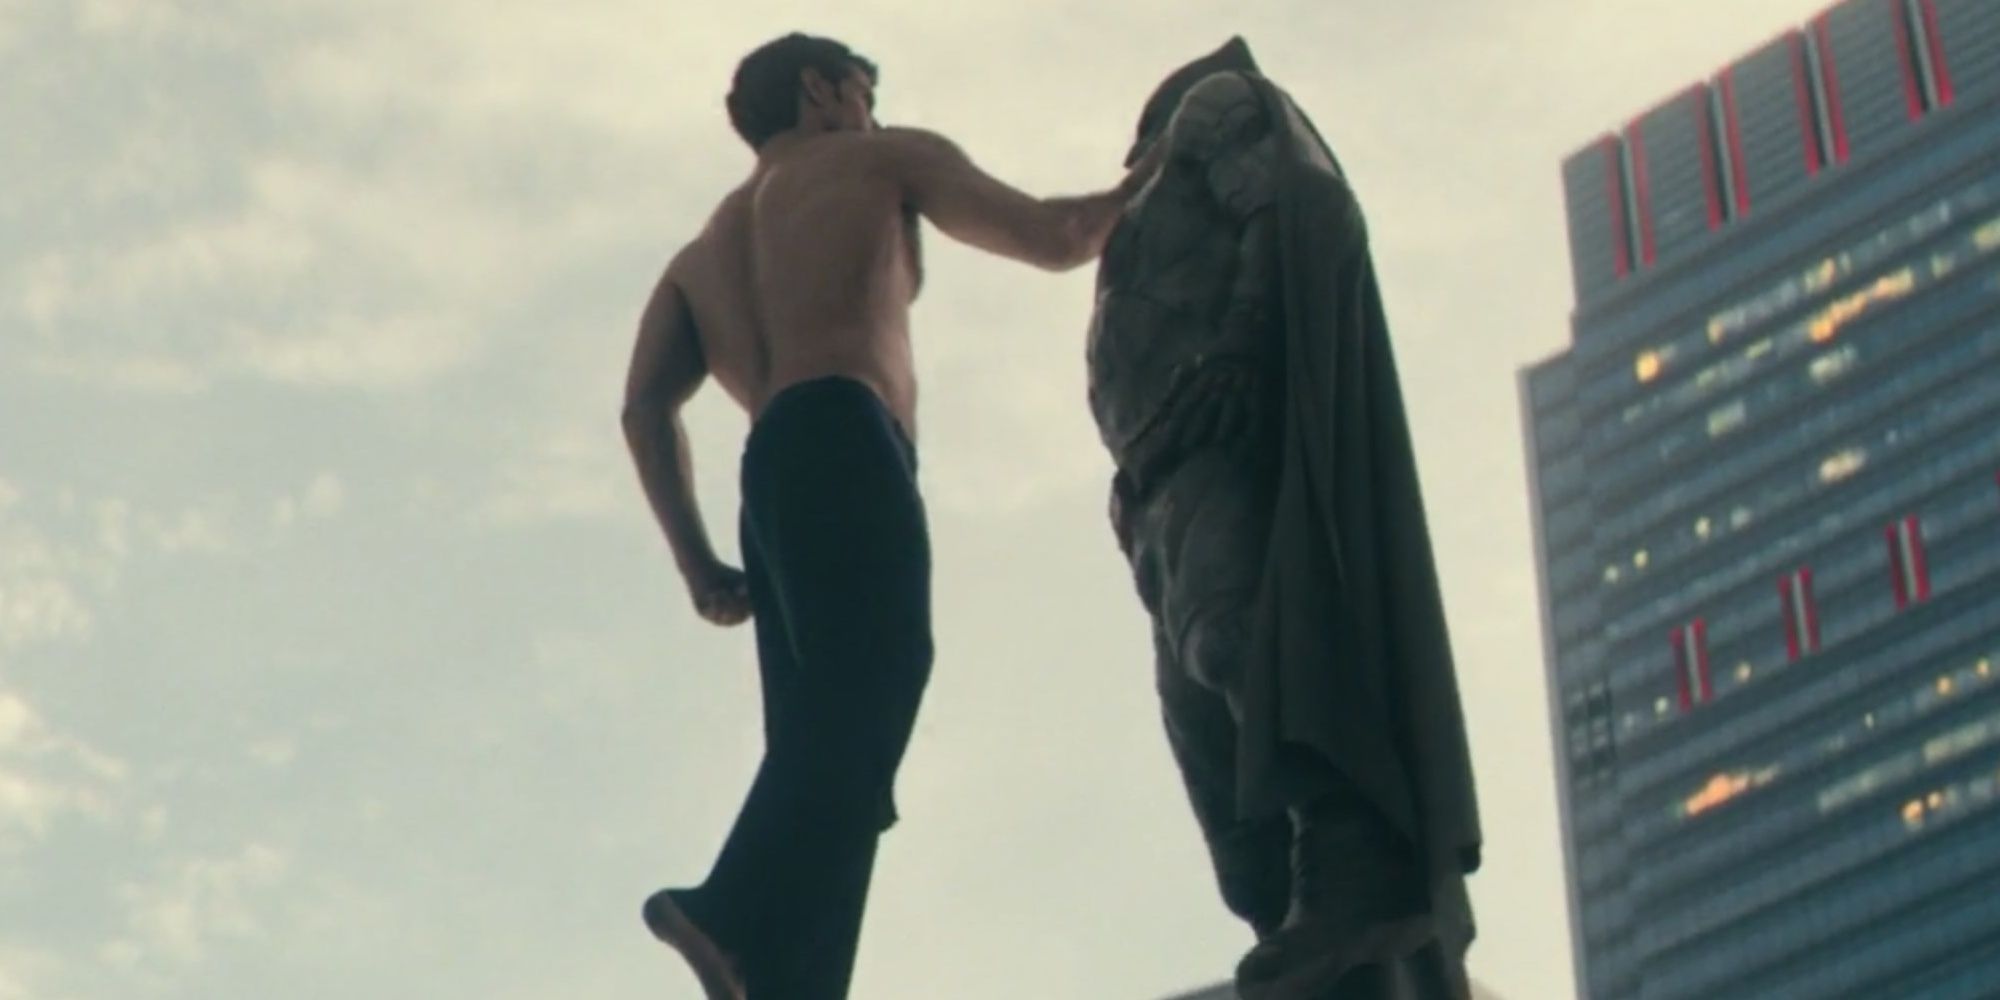 Superman choking Batman midair